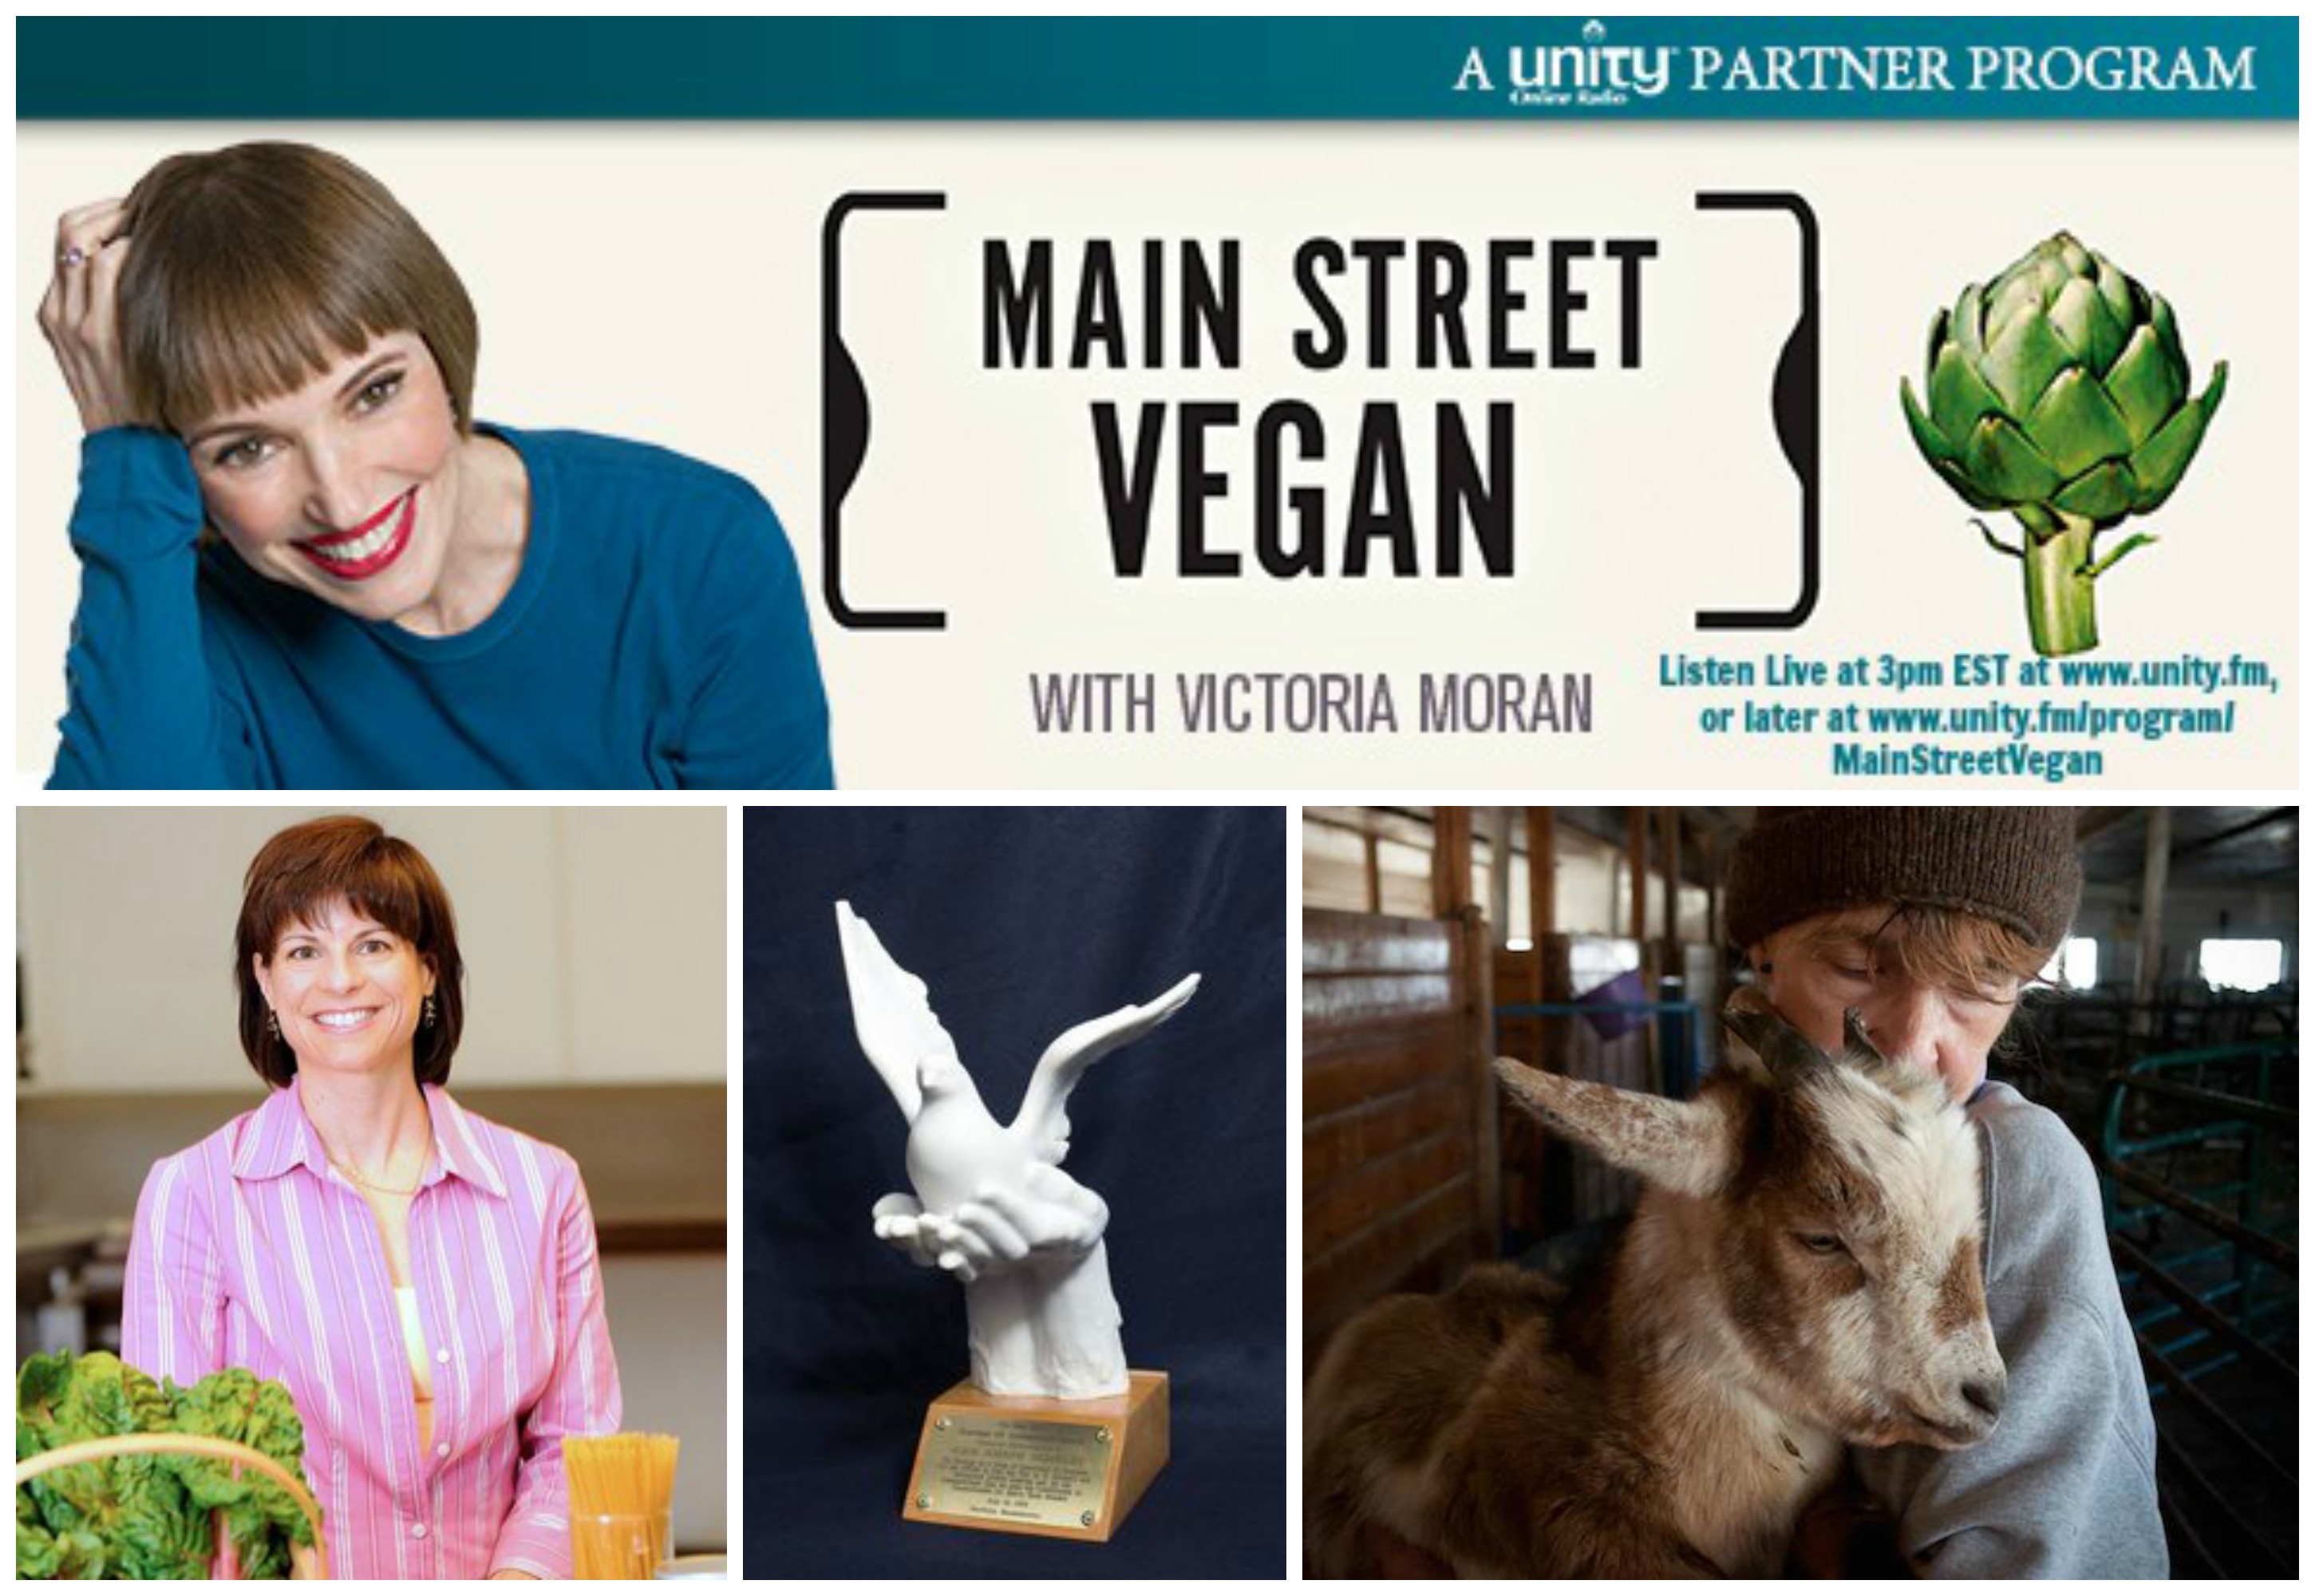 Victoria Moran interviewed Timaree on her live radio show “Main Street Vegan”